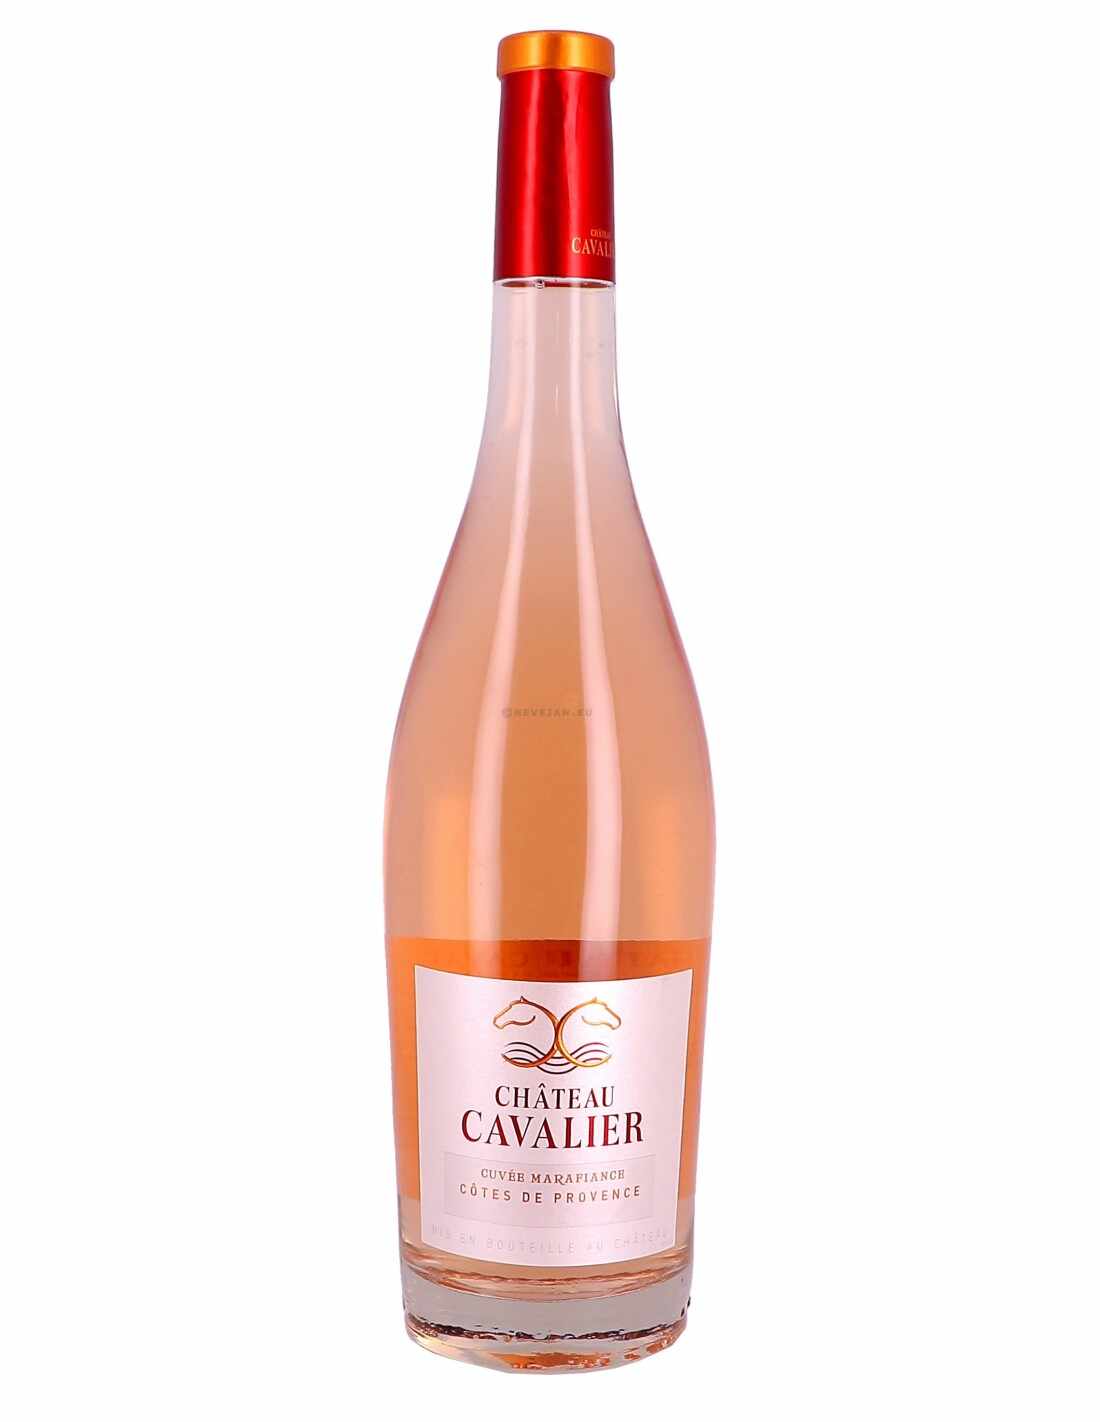 Vin roze sec, Cupaj, Chateau Cavalier CuvÃ©e Marafiance, CÃ´tes de Provence, 12.5% alc., 1.5L, Franta